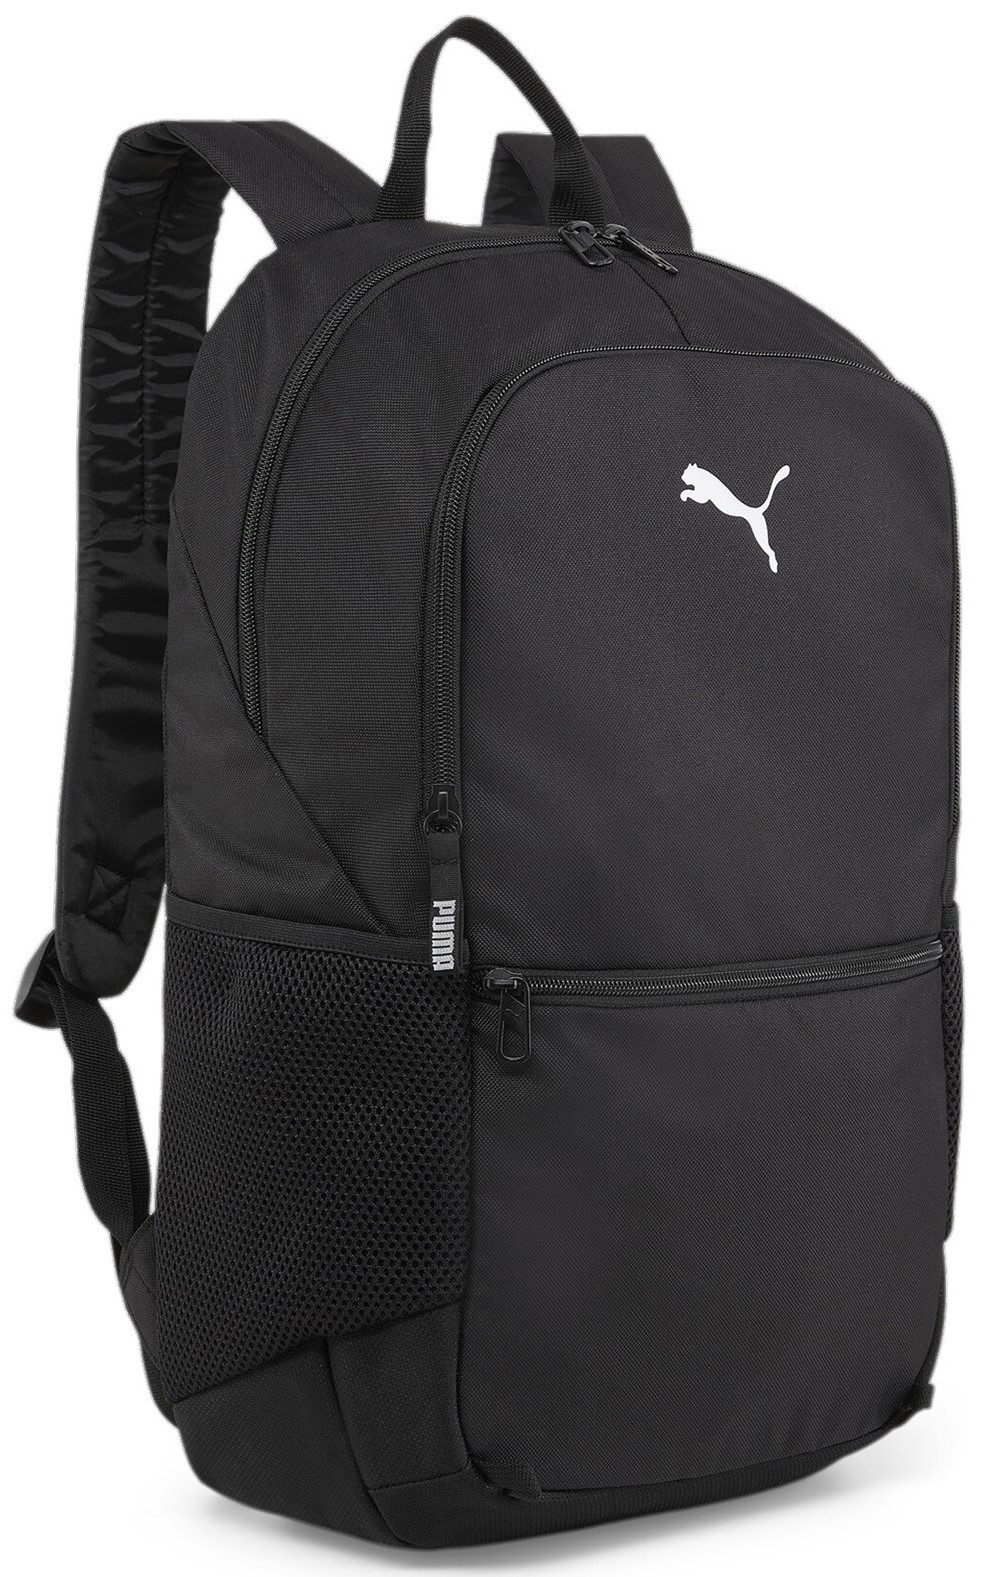 Rucsac Puma teamGOAL Backpack with ball net